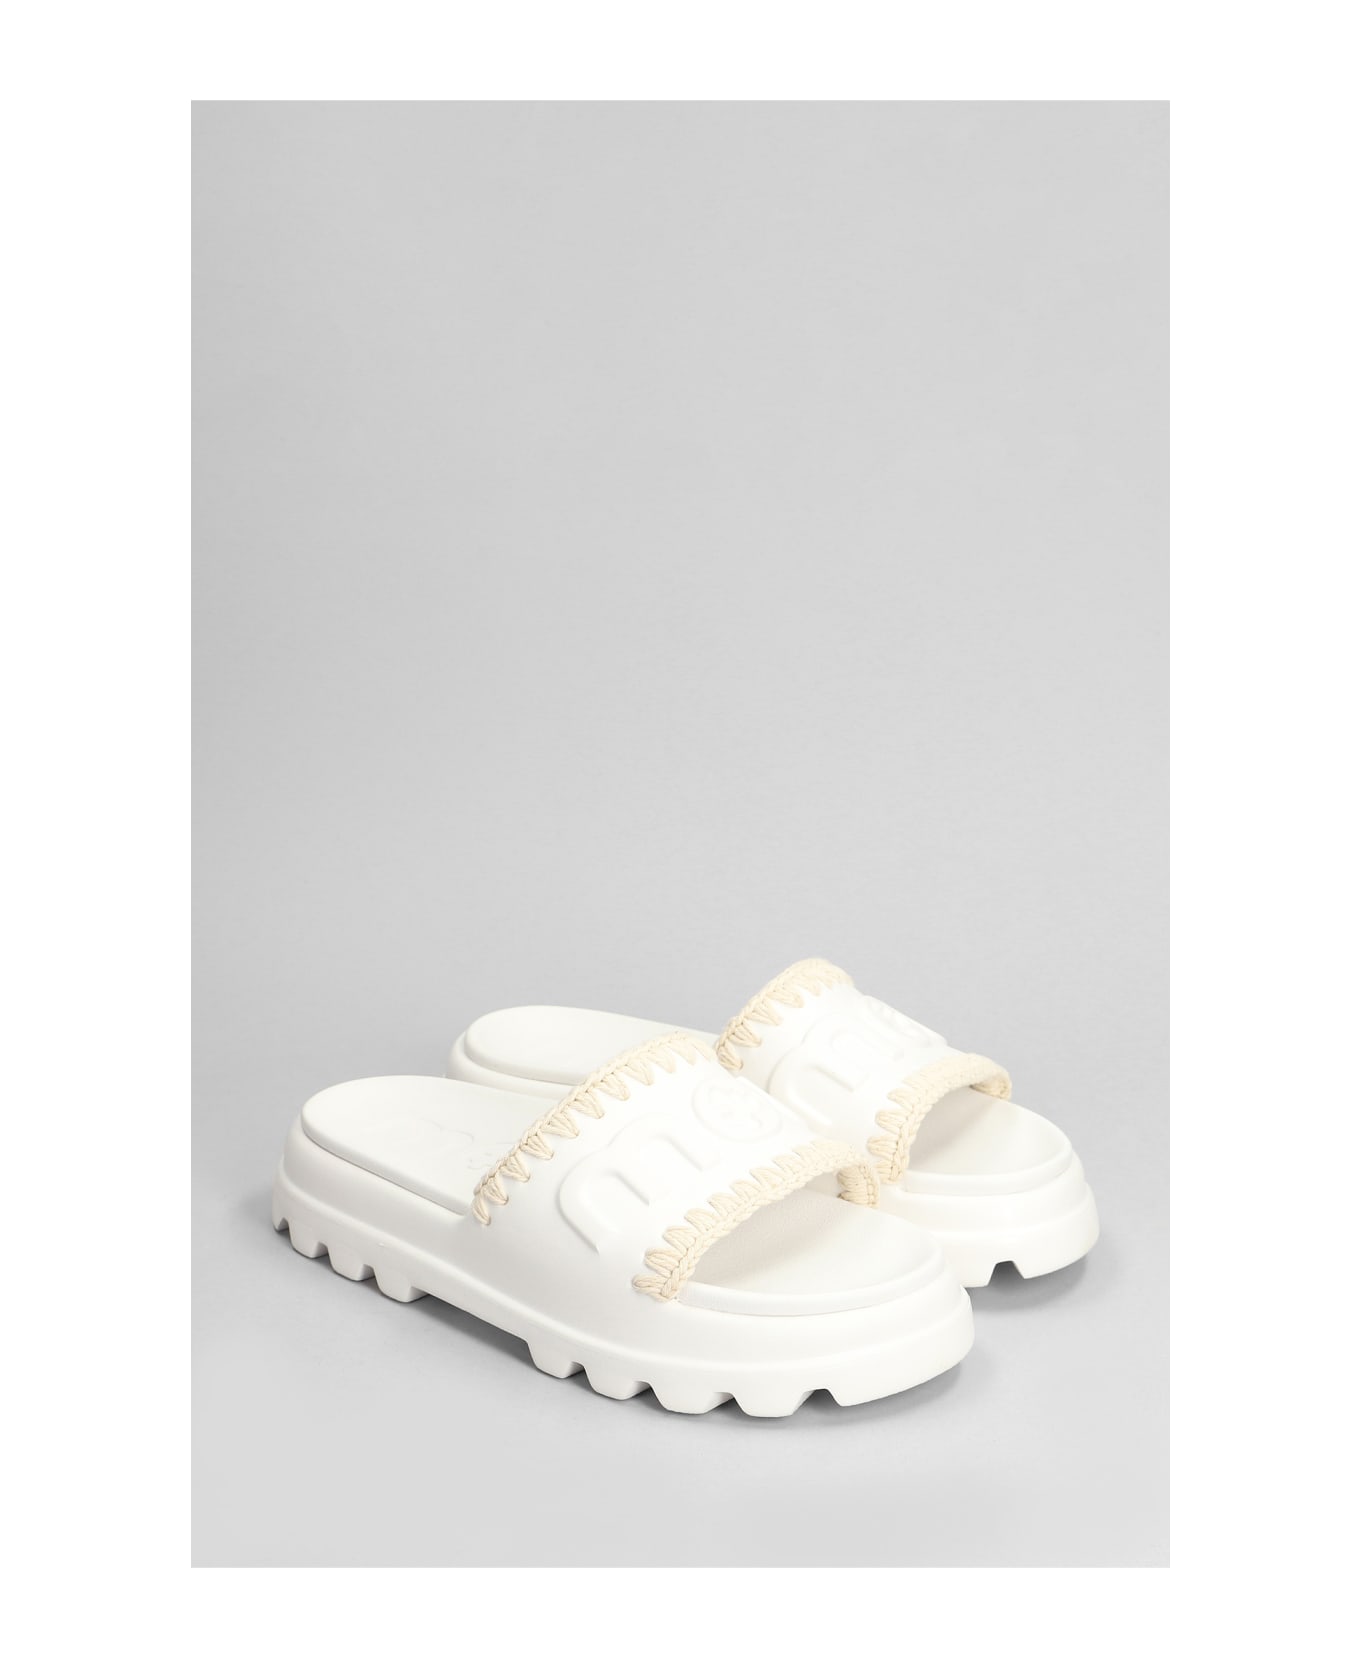 Mou Eva Onepiece Flats In White Rubber/plasic - white